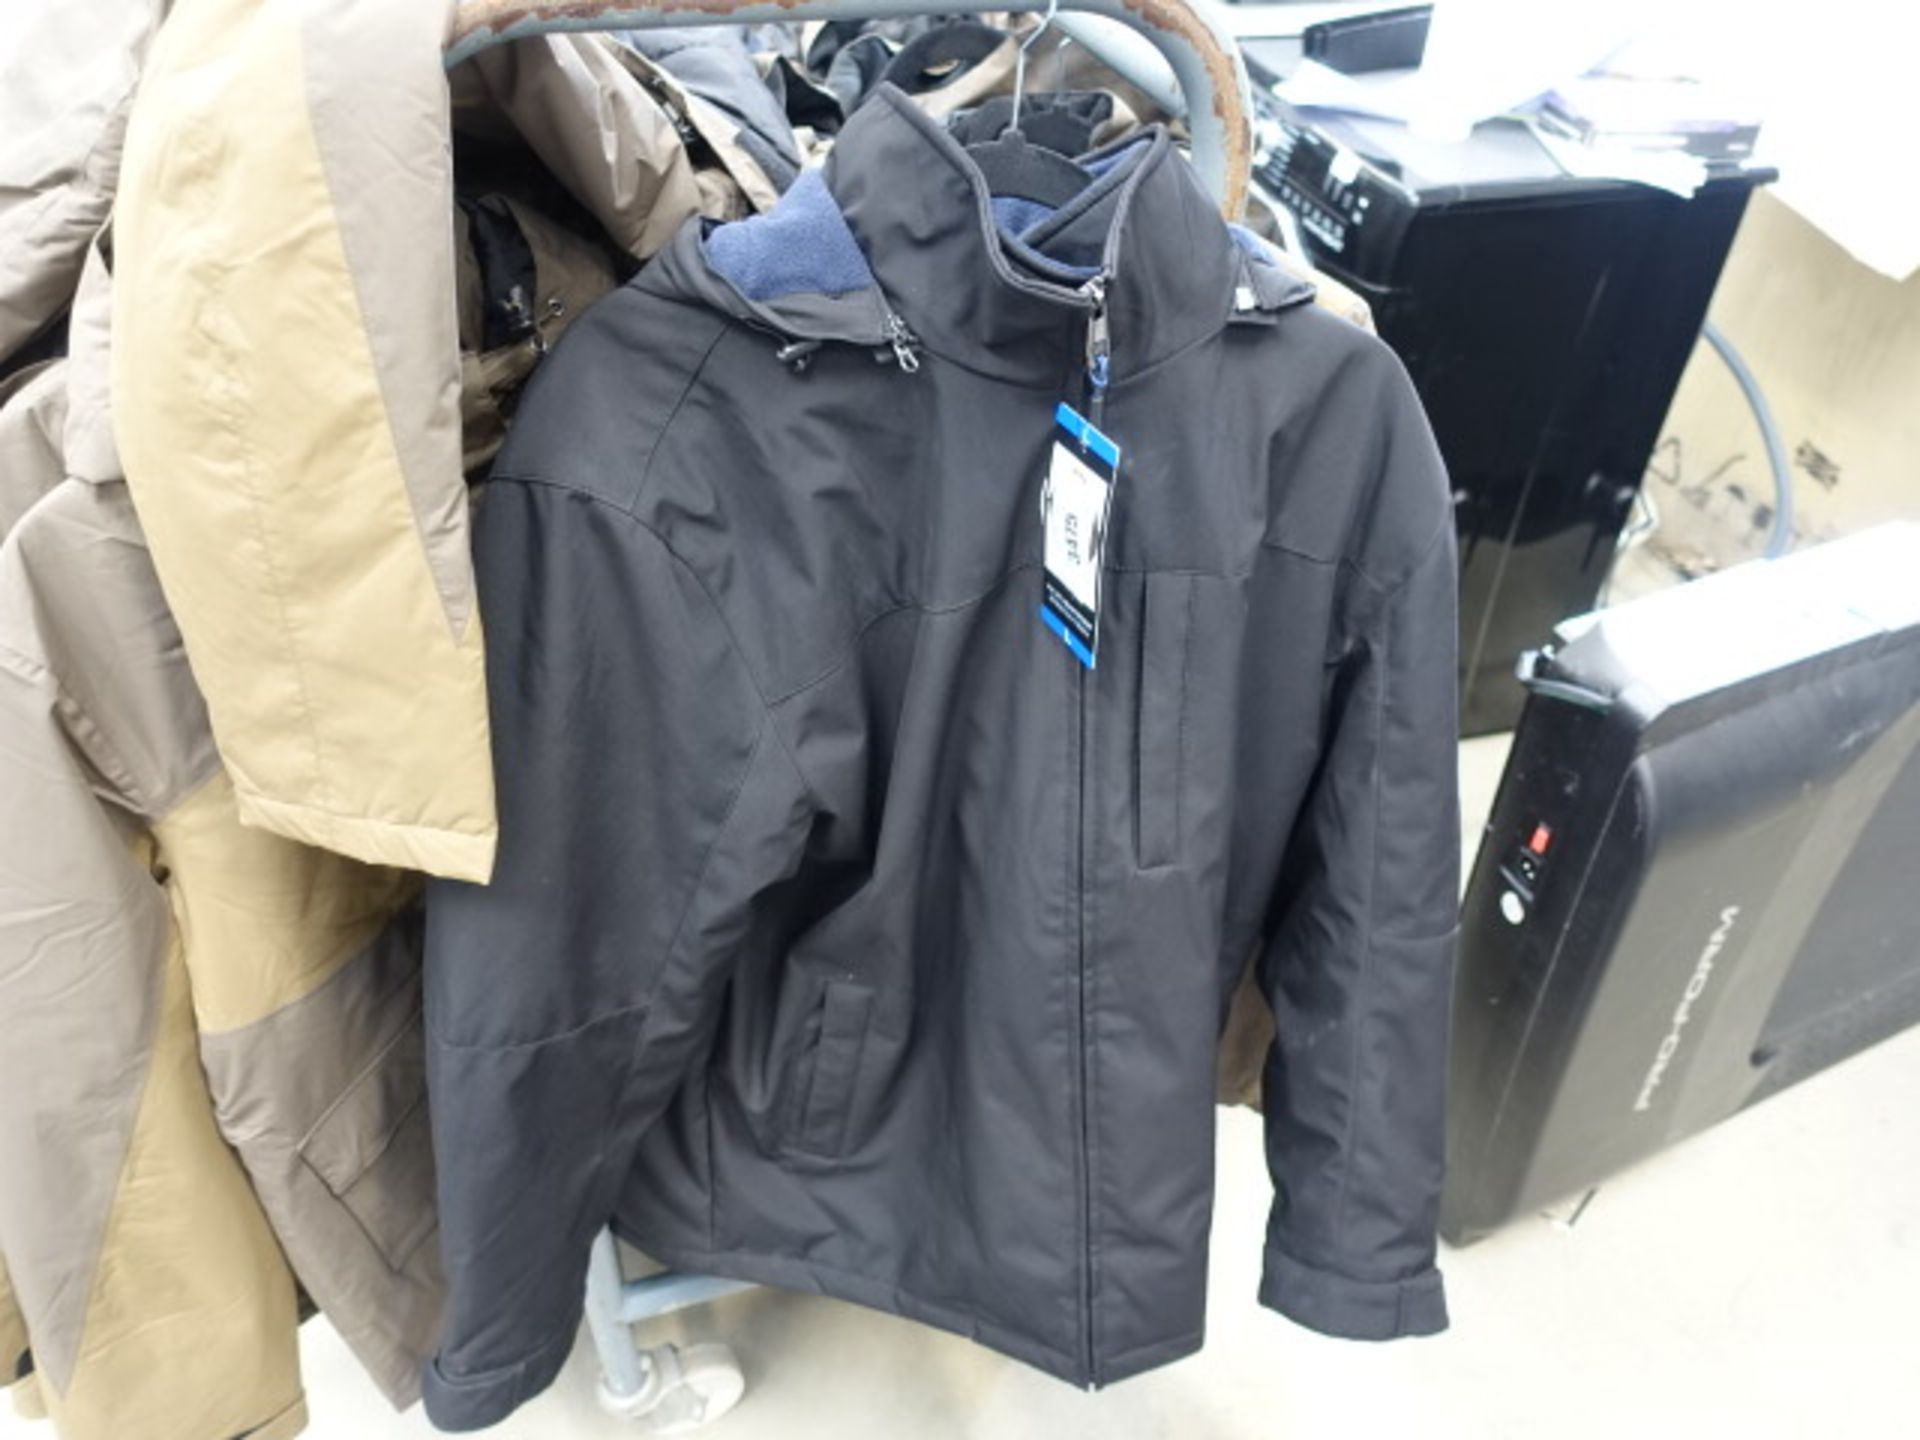 Full zipped hooded gents Weatherproof coat size L